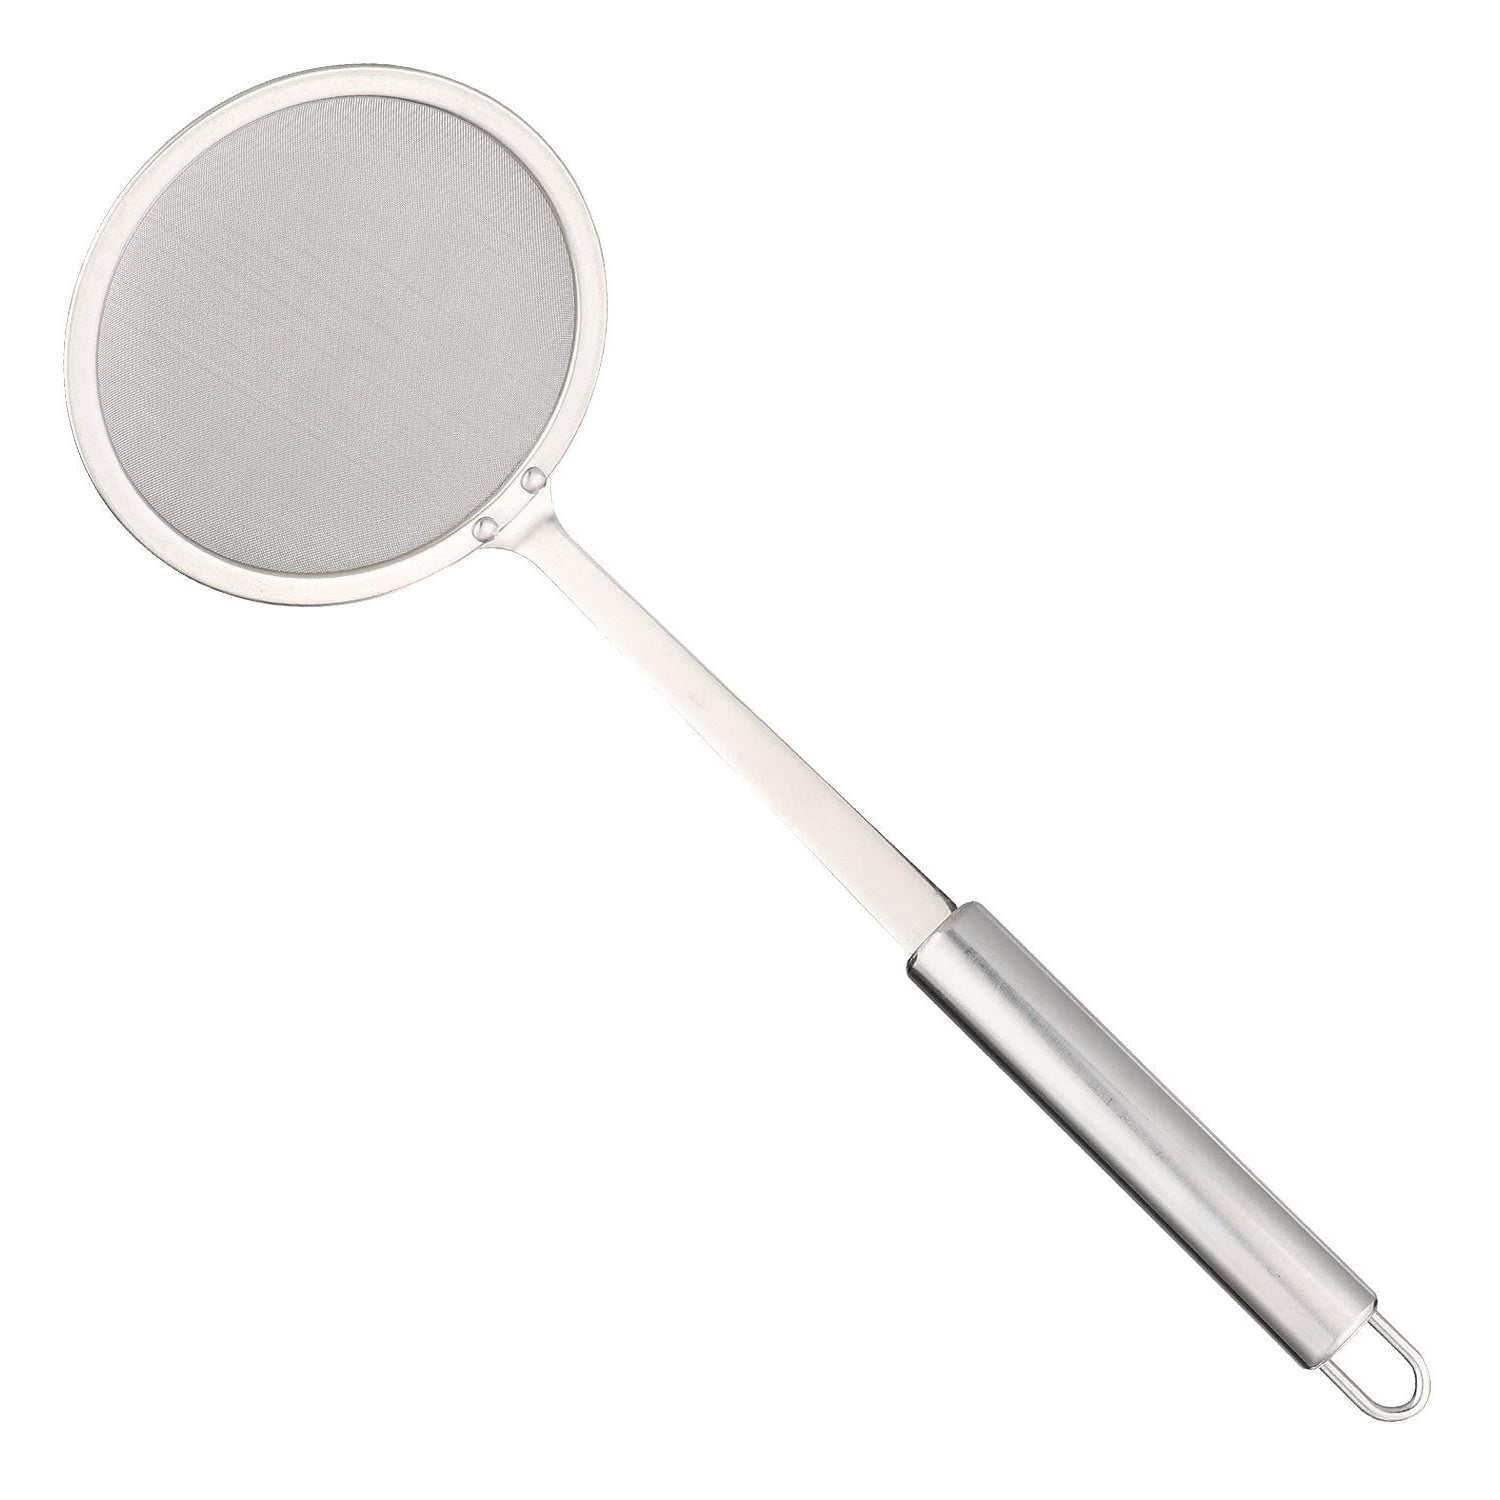 M Silver LOVIVER Skimmer Spoon Mesh Strainer Ladle Skimming Oil Filter Grease Tool 3 Sizes